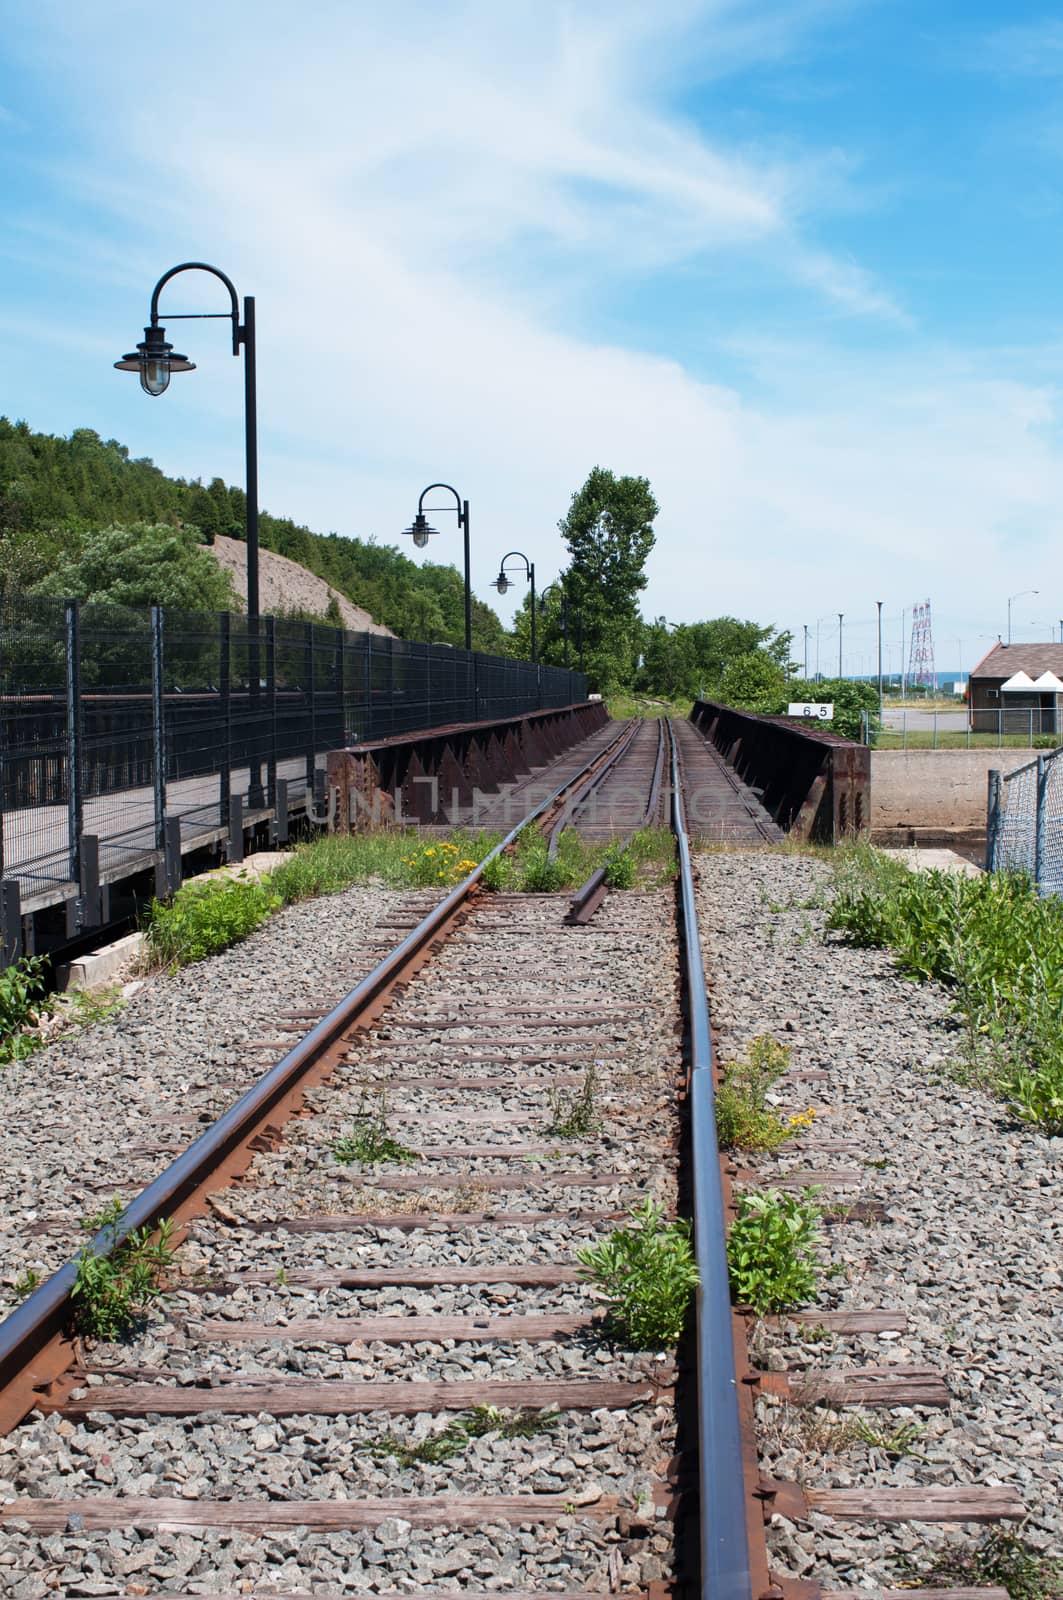 Railway railroad tracks for trains  summer day